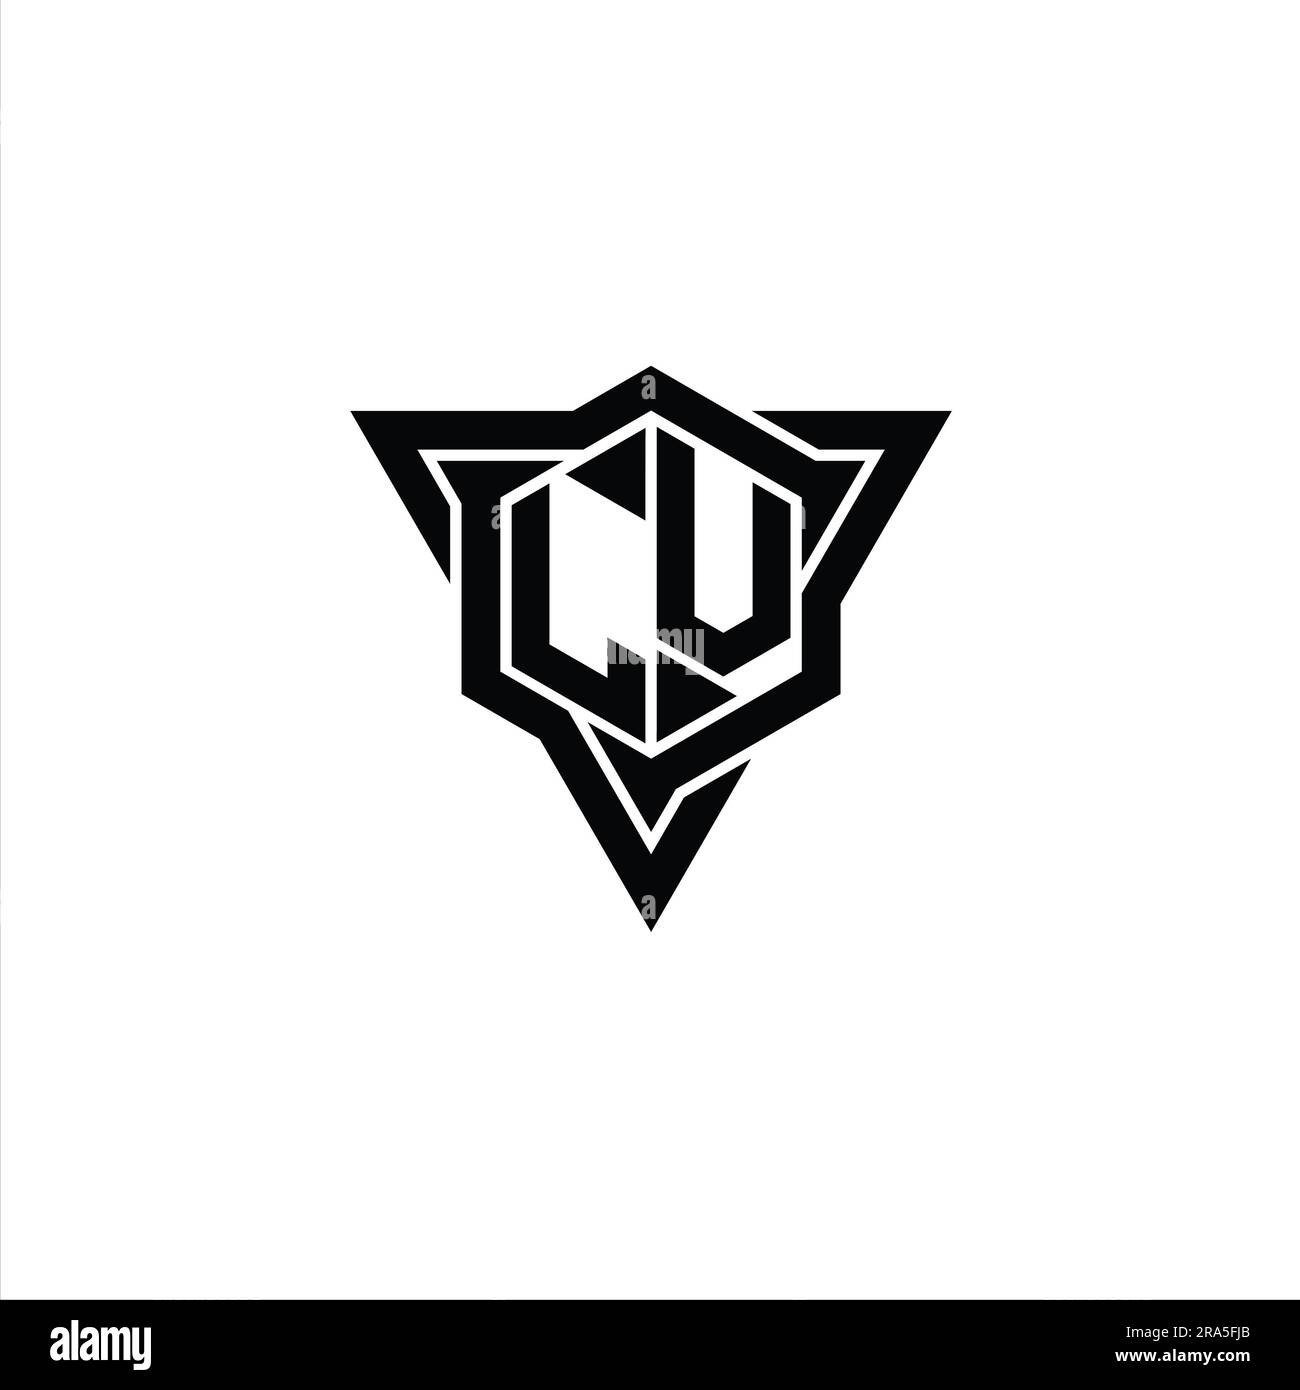 Lv logo monogram with emblem shield design Vector Image